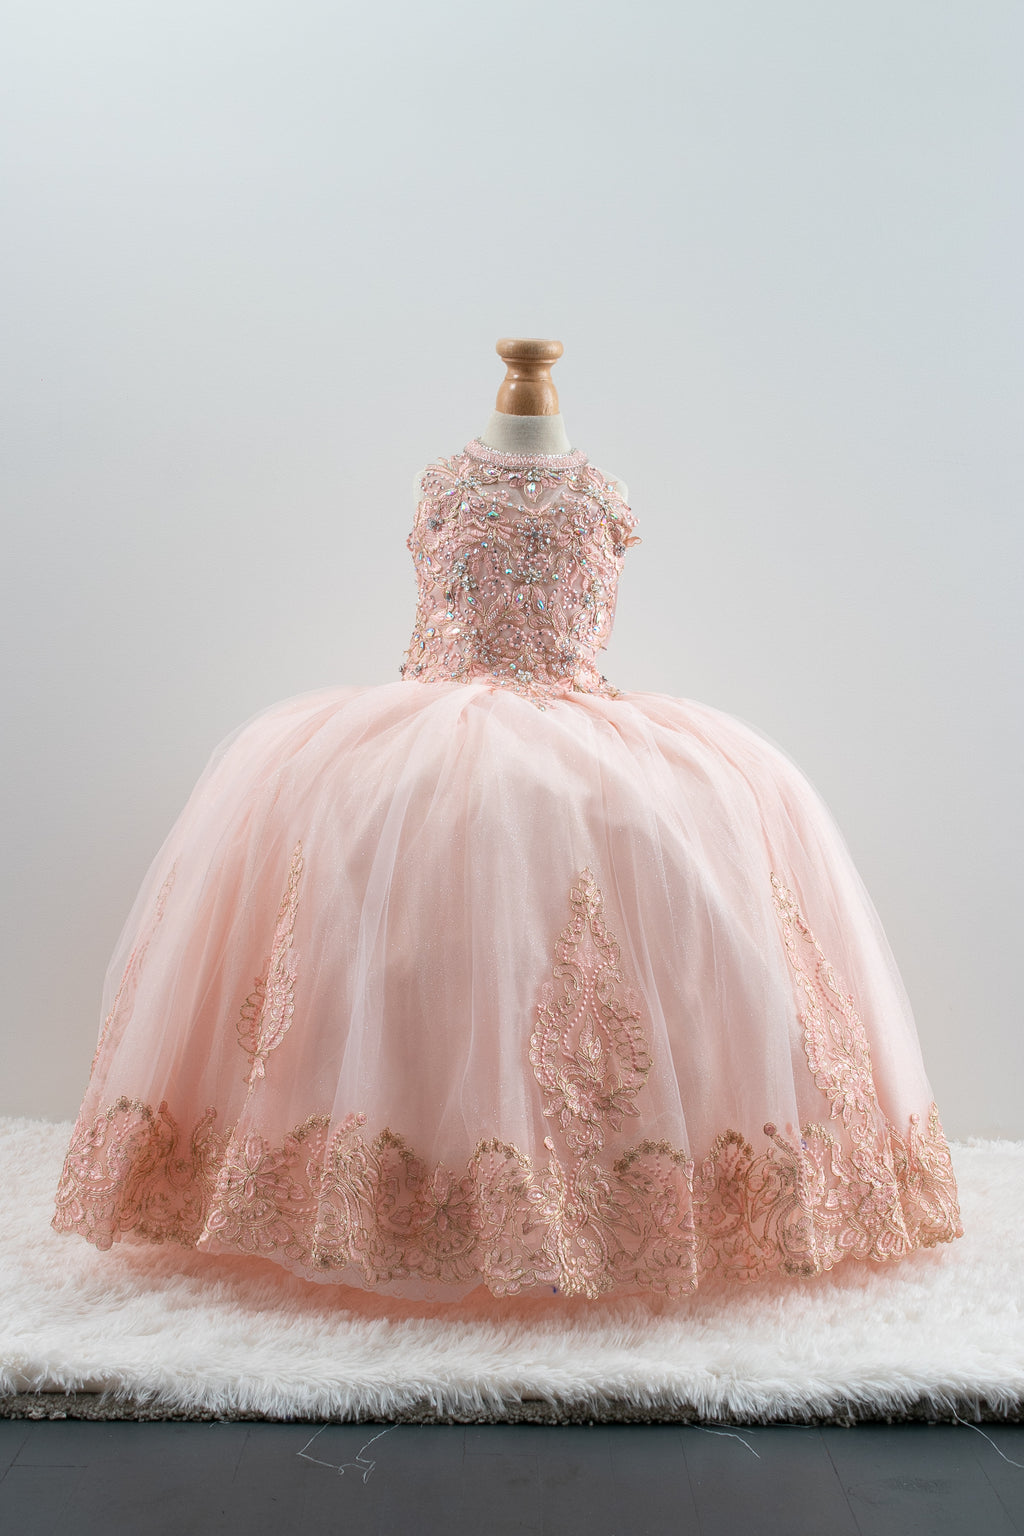 light pink/cream presentation dress for girls